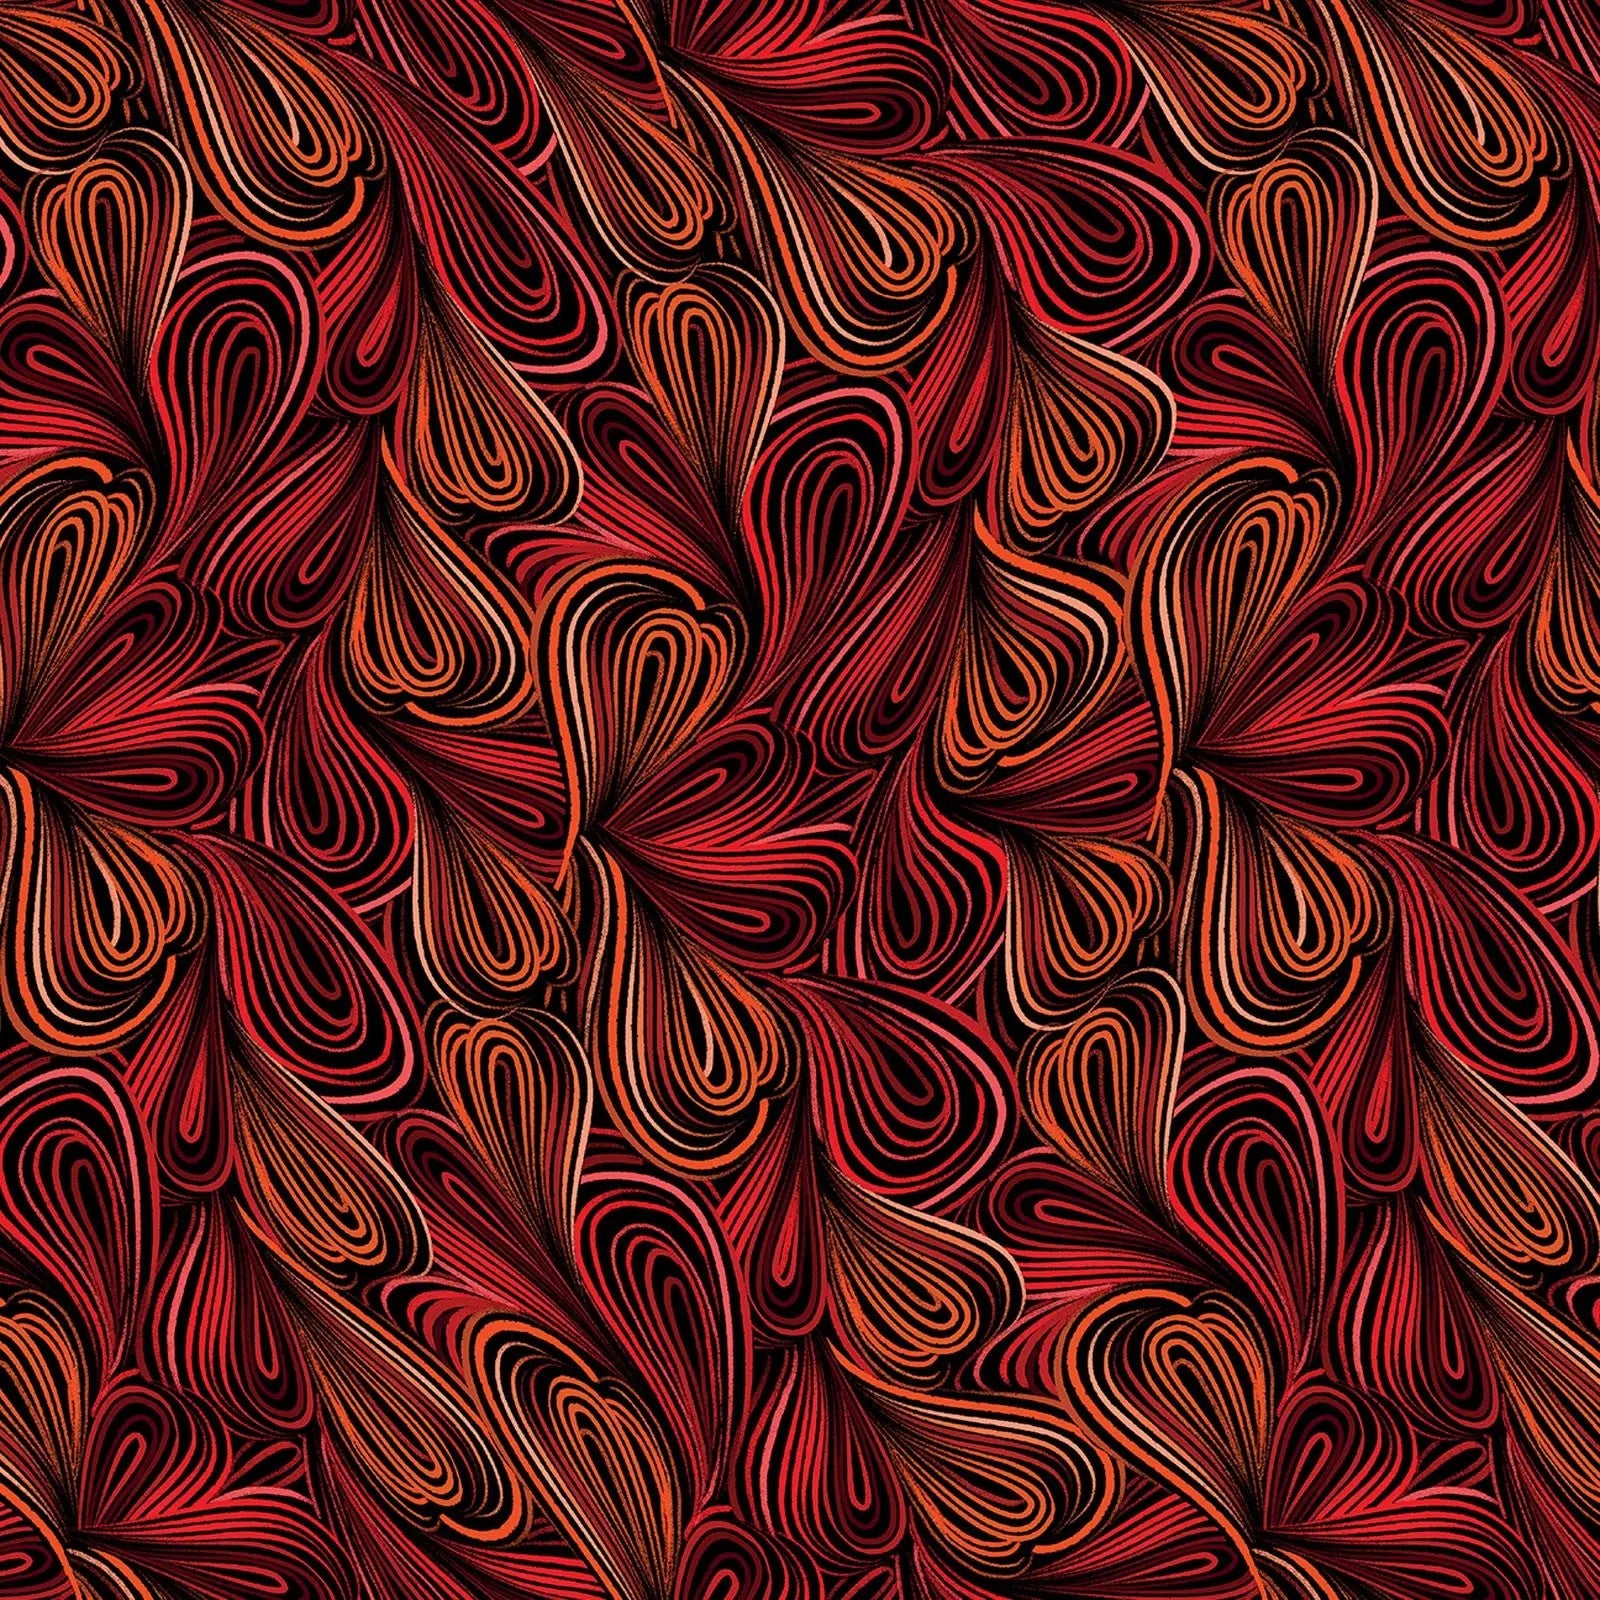 Red and orange modern wave wideback fabric